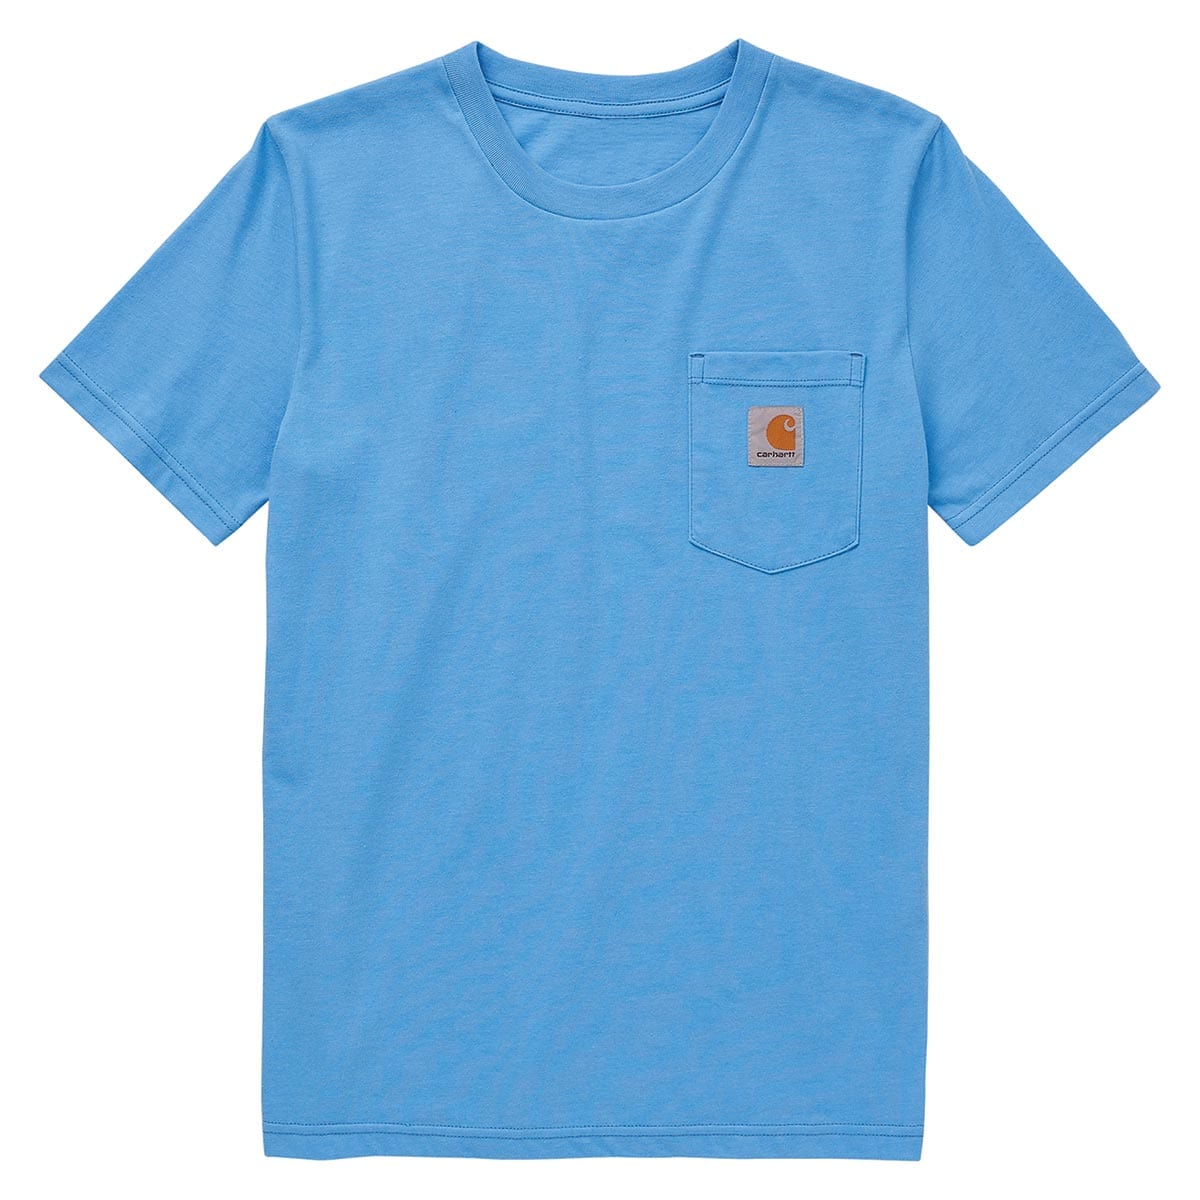 Carhartt Toddler Pocket T-Shirt